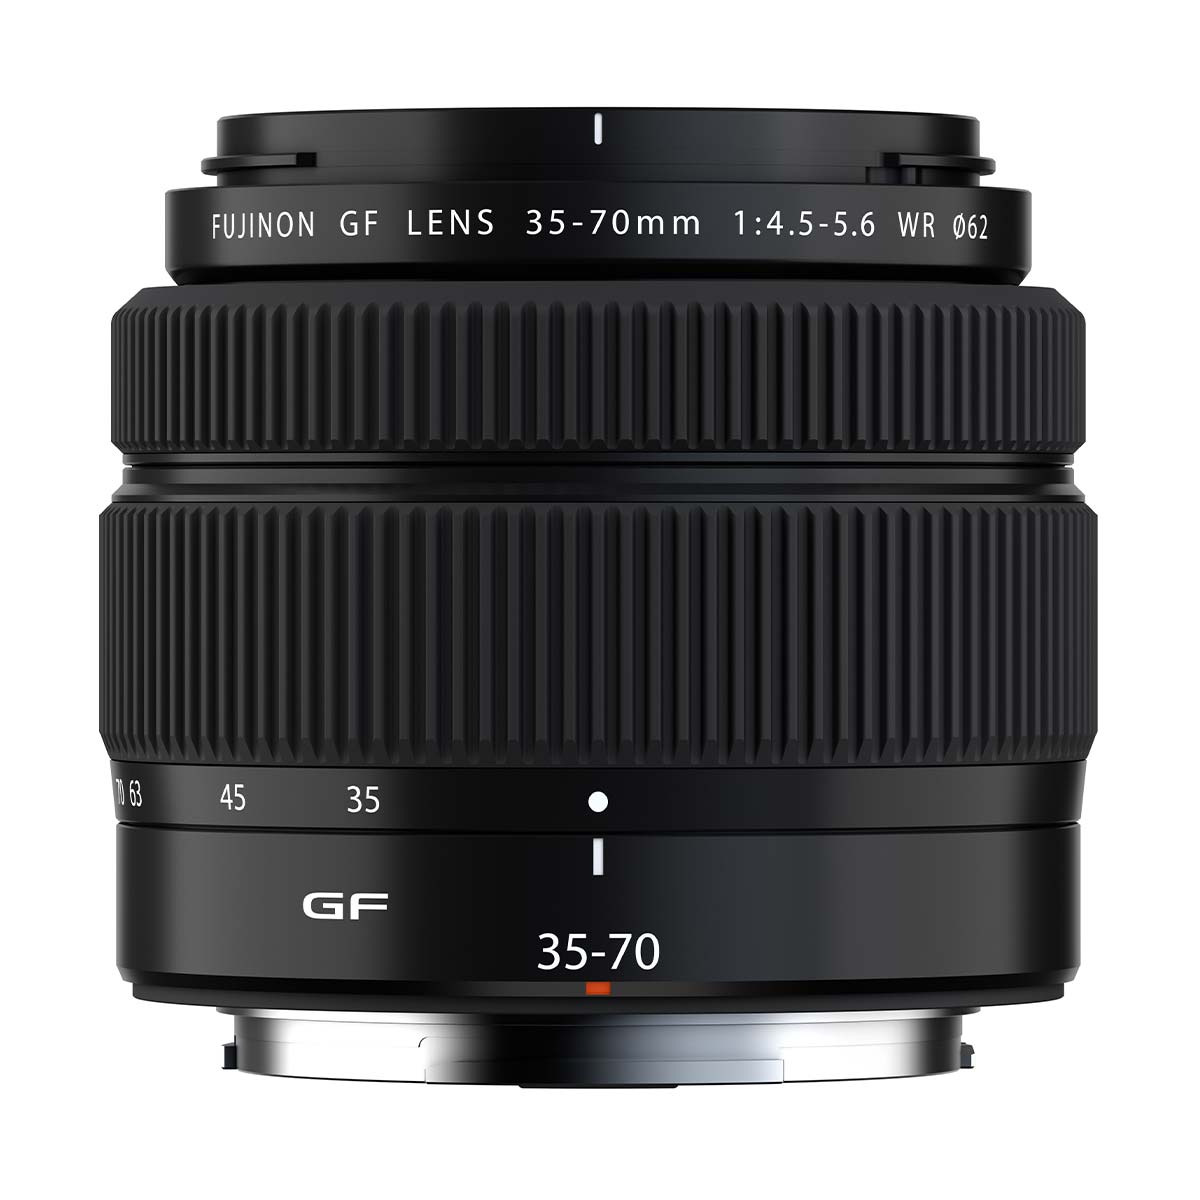 Fujifilm GF 35-70mm f/4.5-5.6 WR Lens *USED - OPEN BOX*